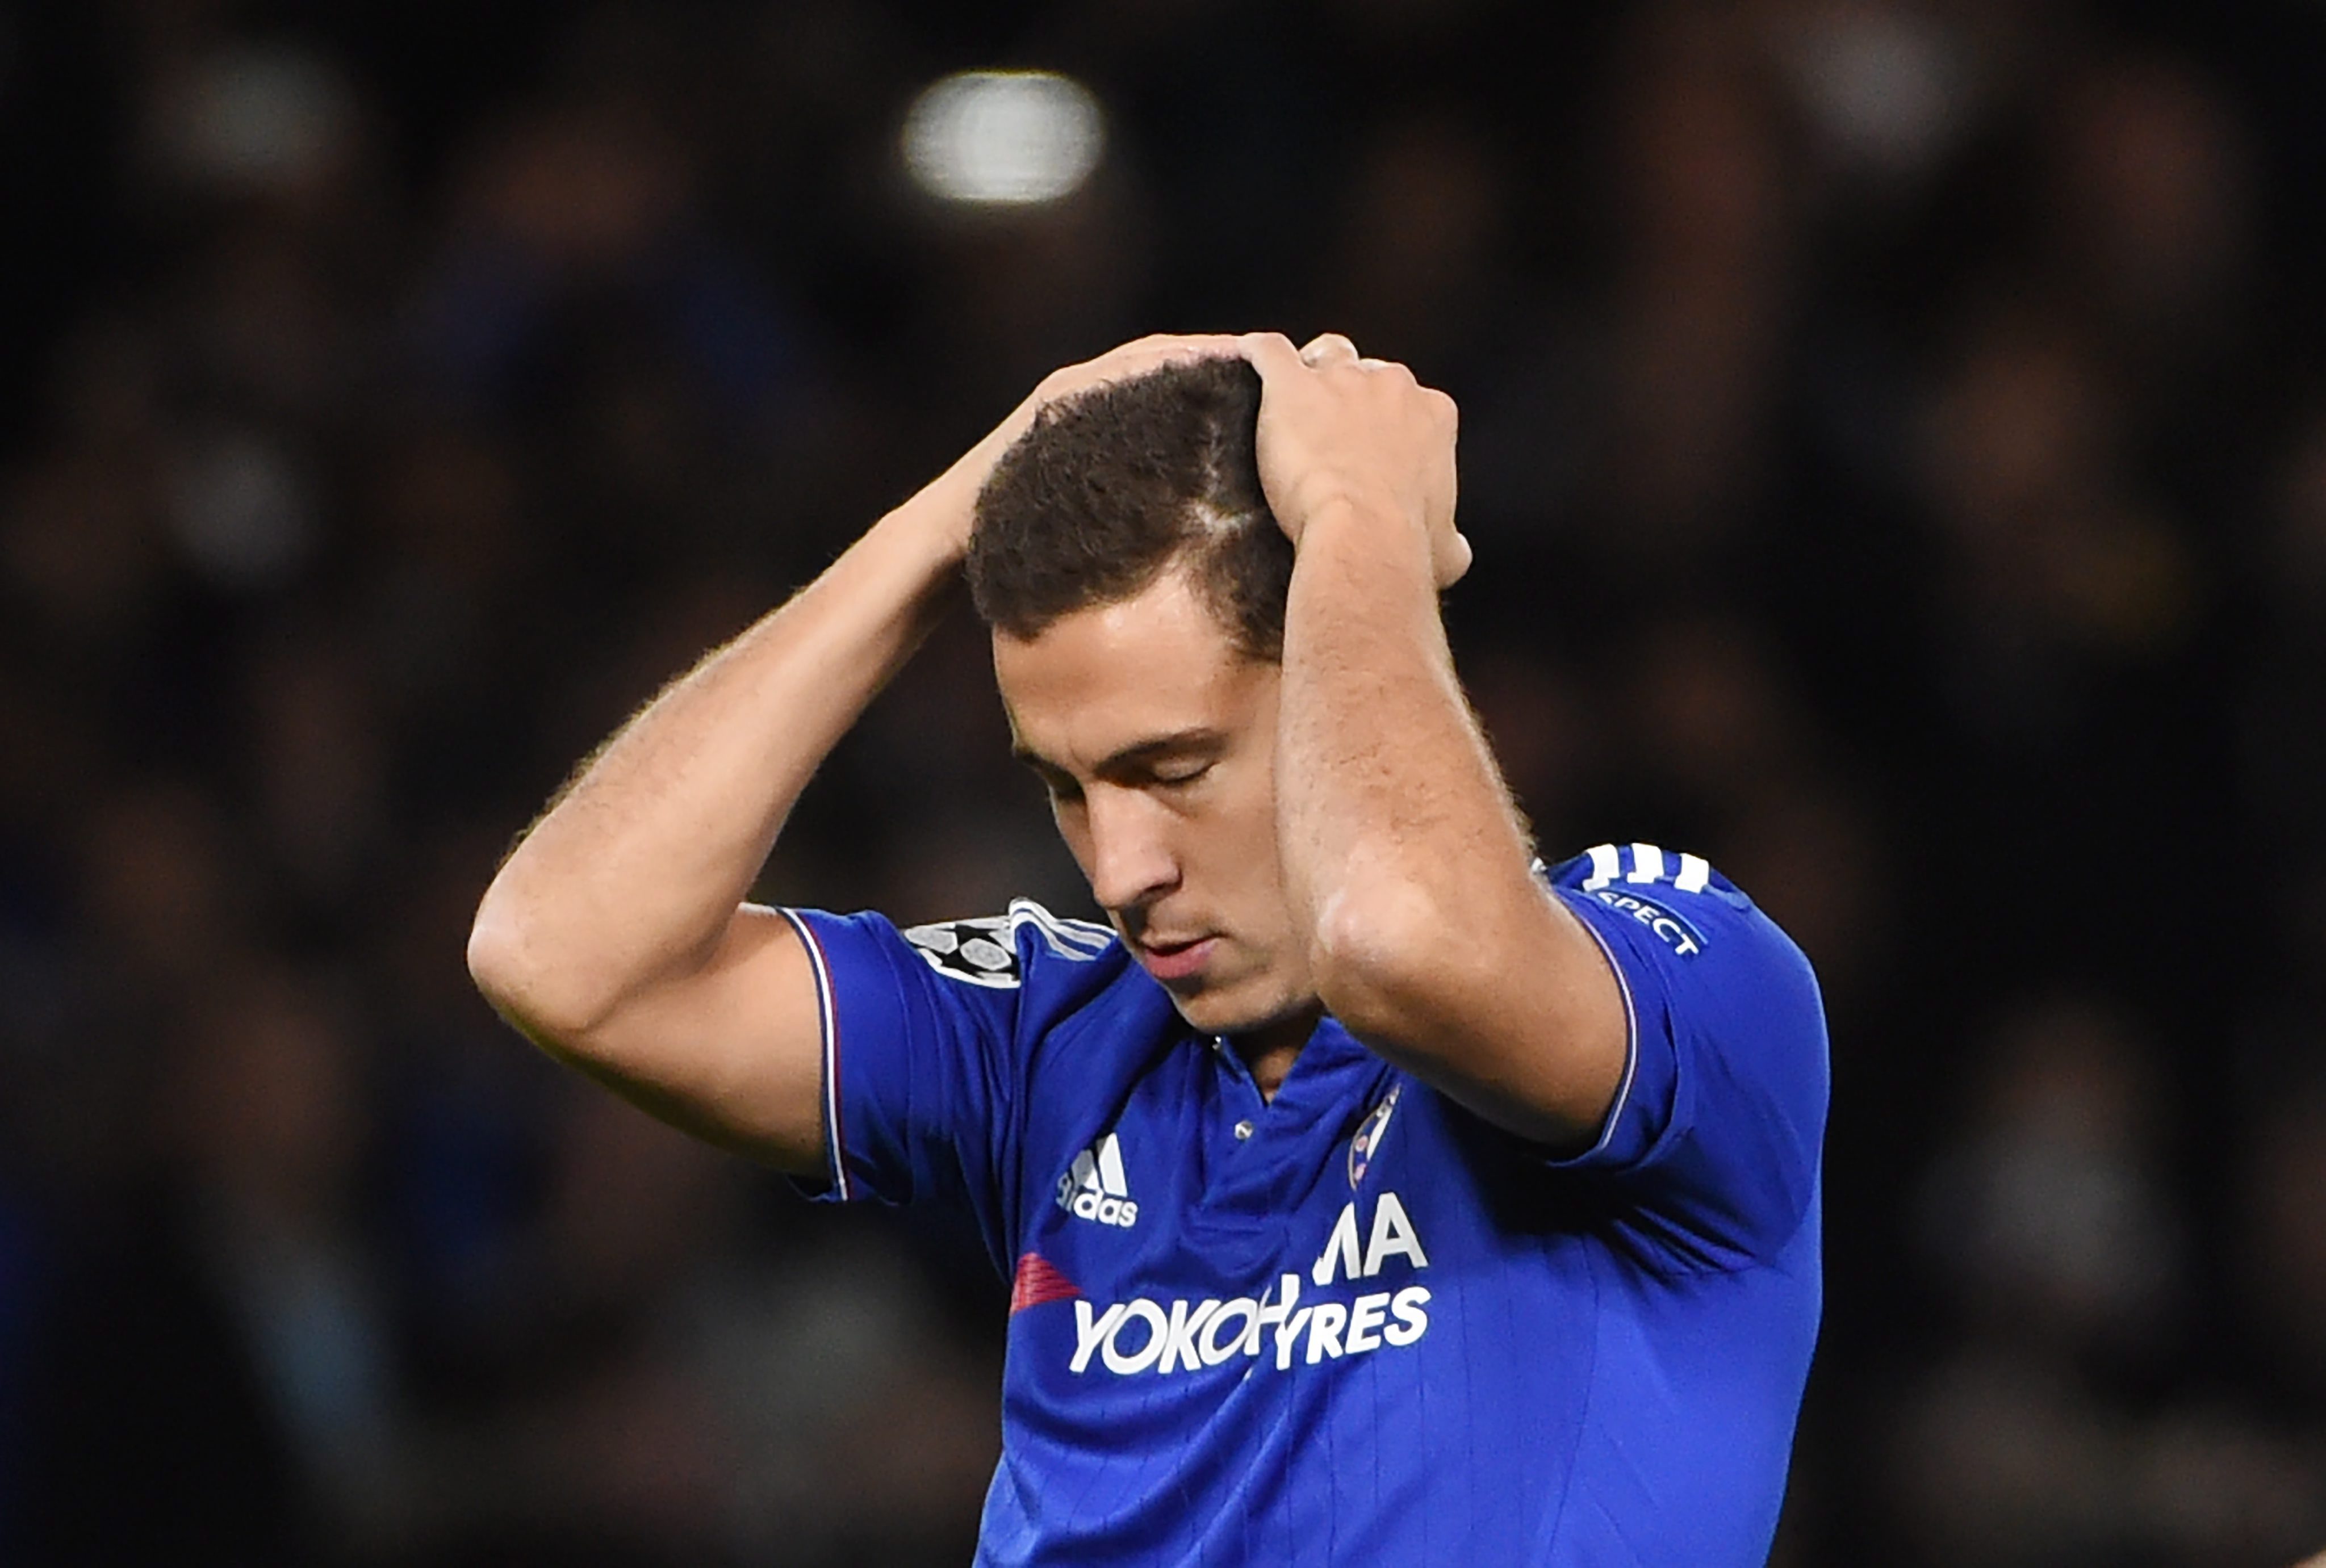 Eden Hazard's performances have dropped sharply this season